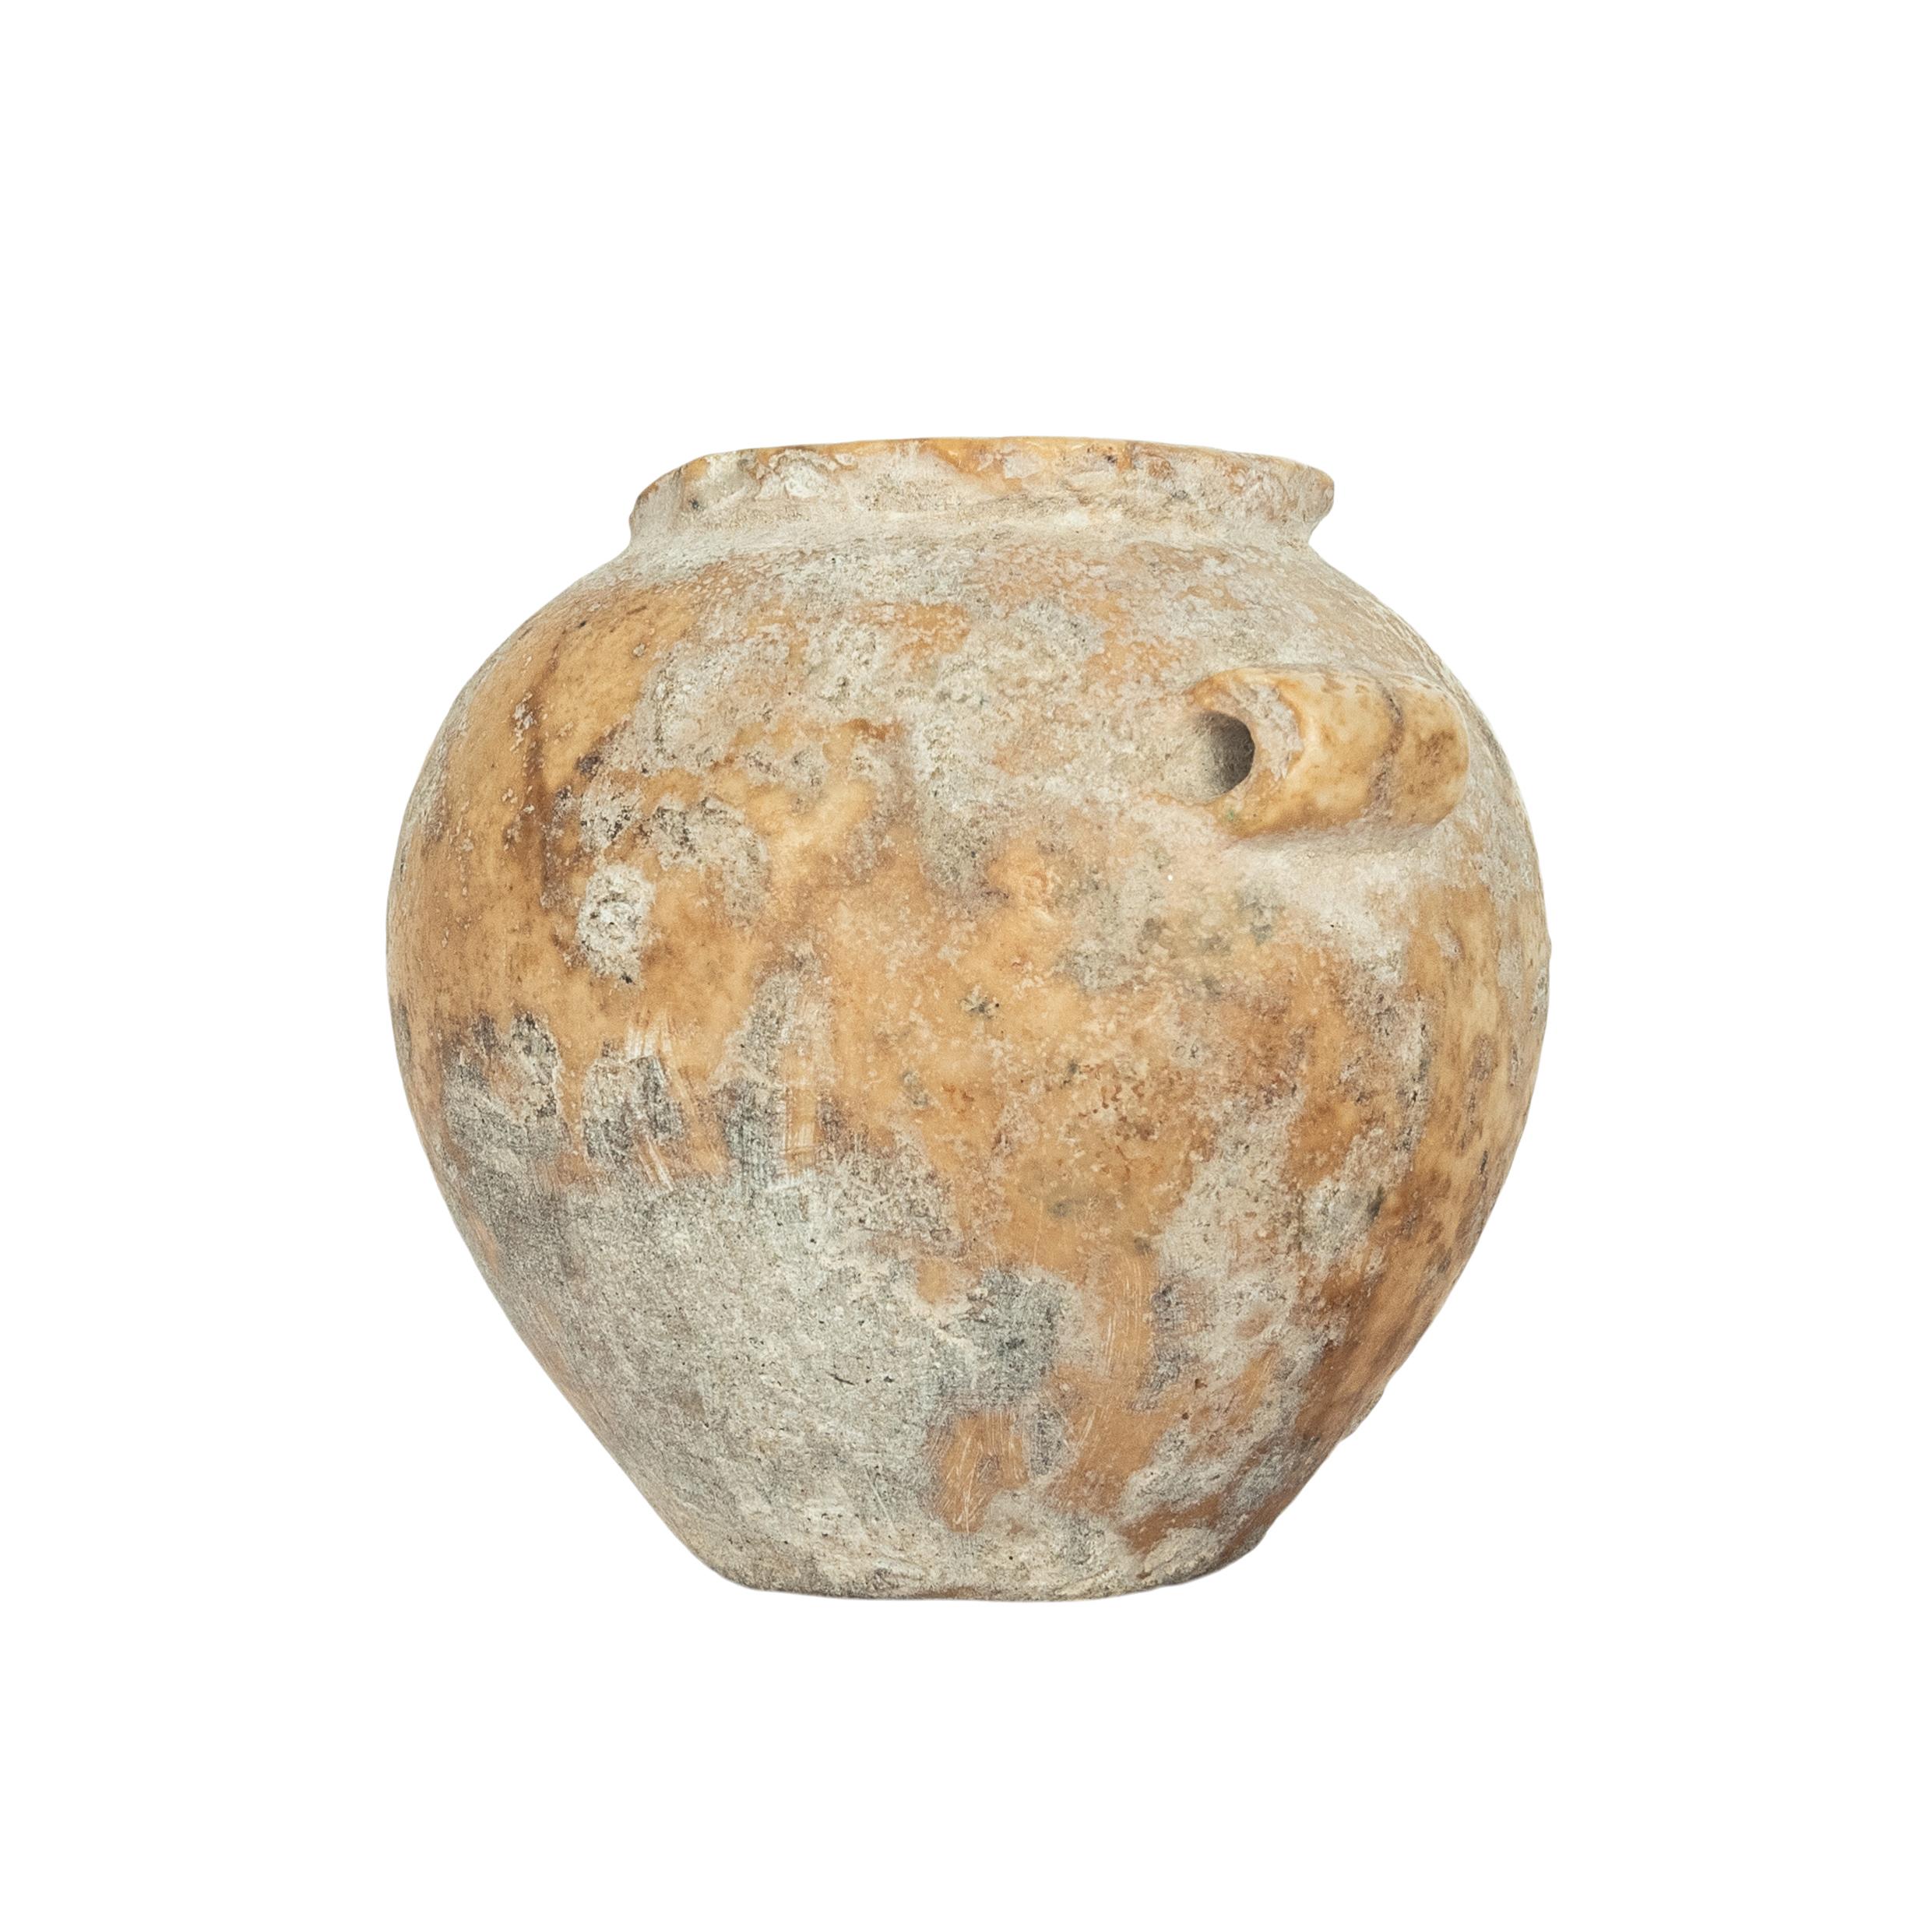 Égyptien Ancienne Égypte Ancien Empire Miniature A Stone Vessel Jar 2600-2800 BCE